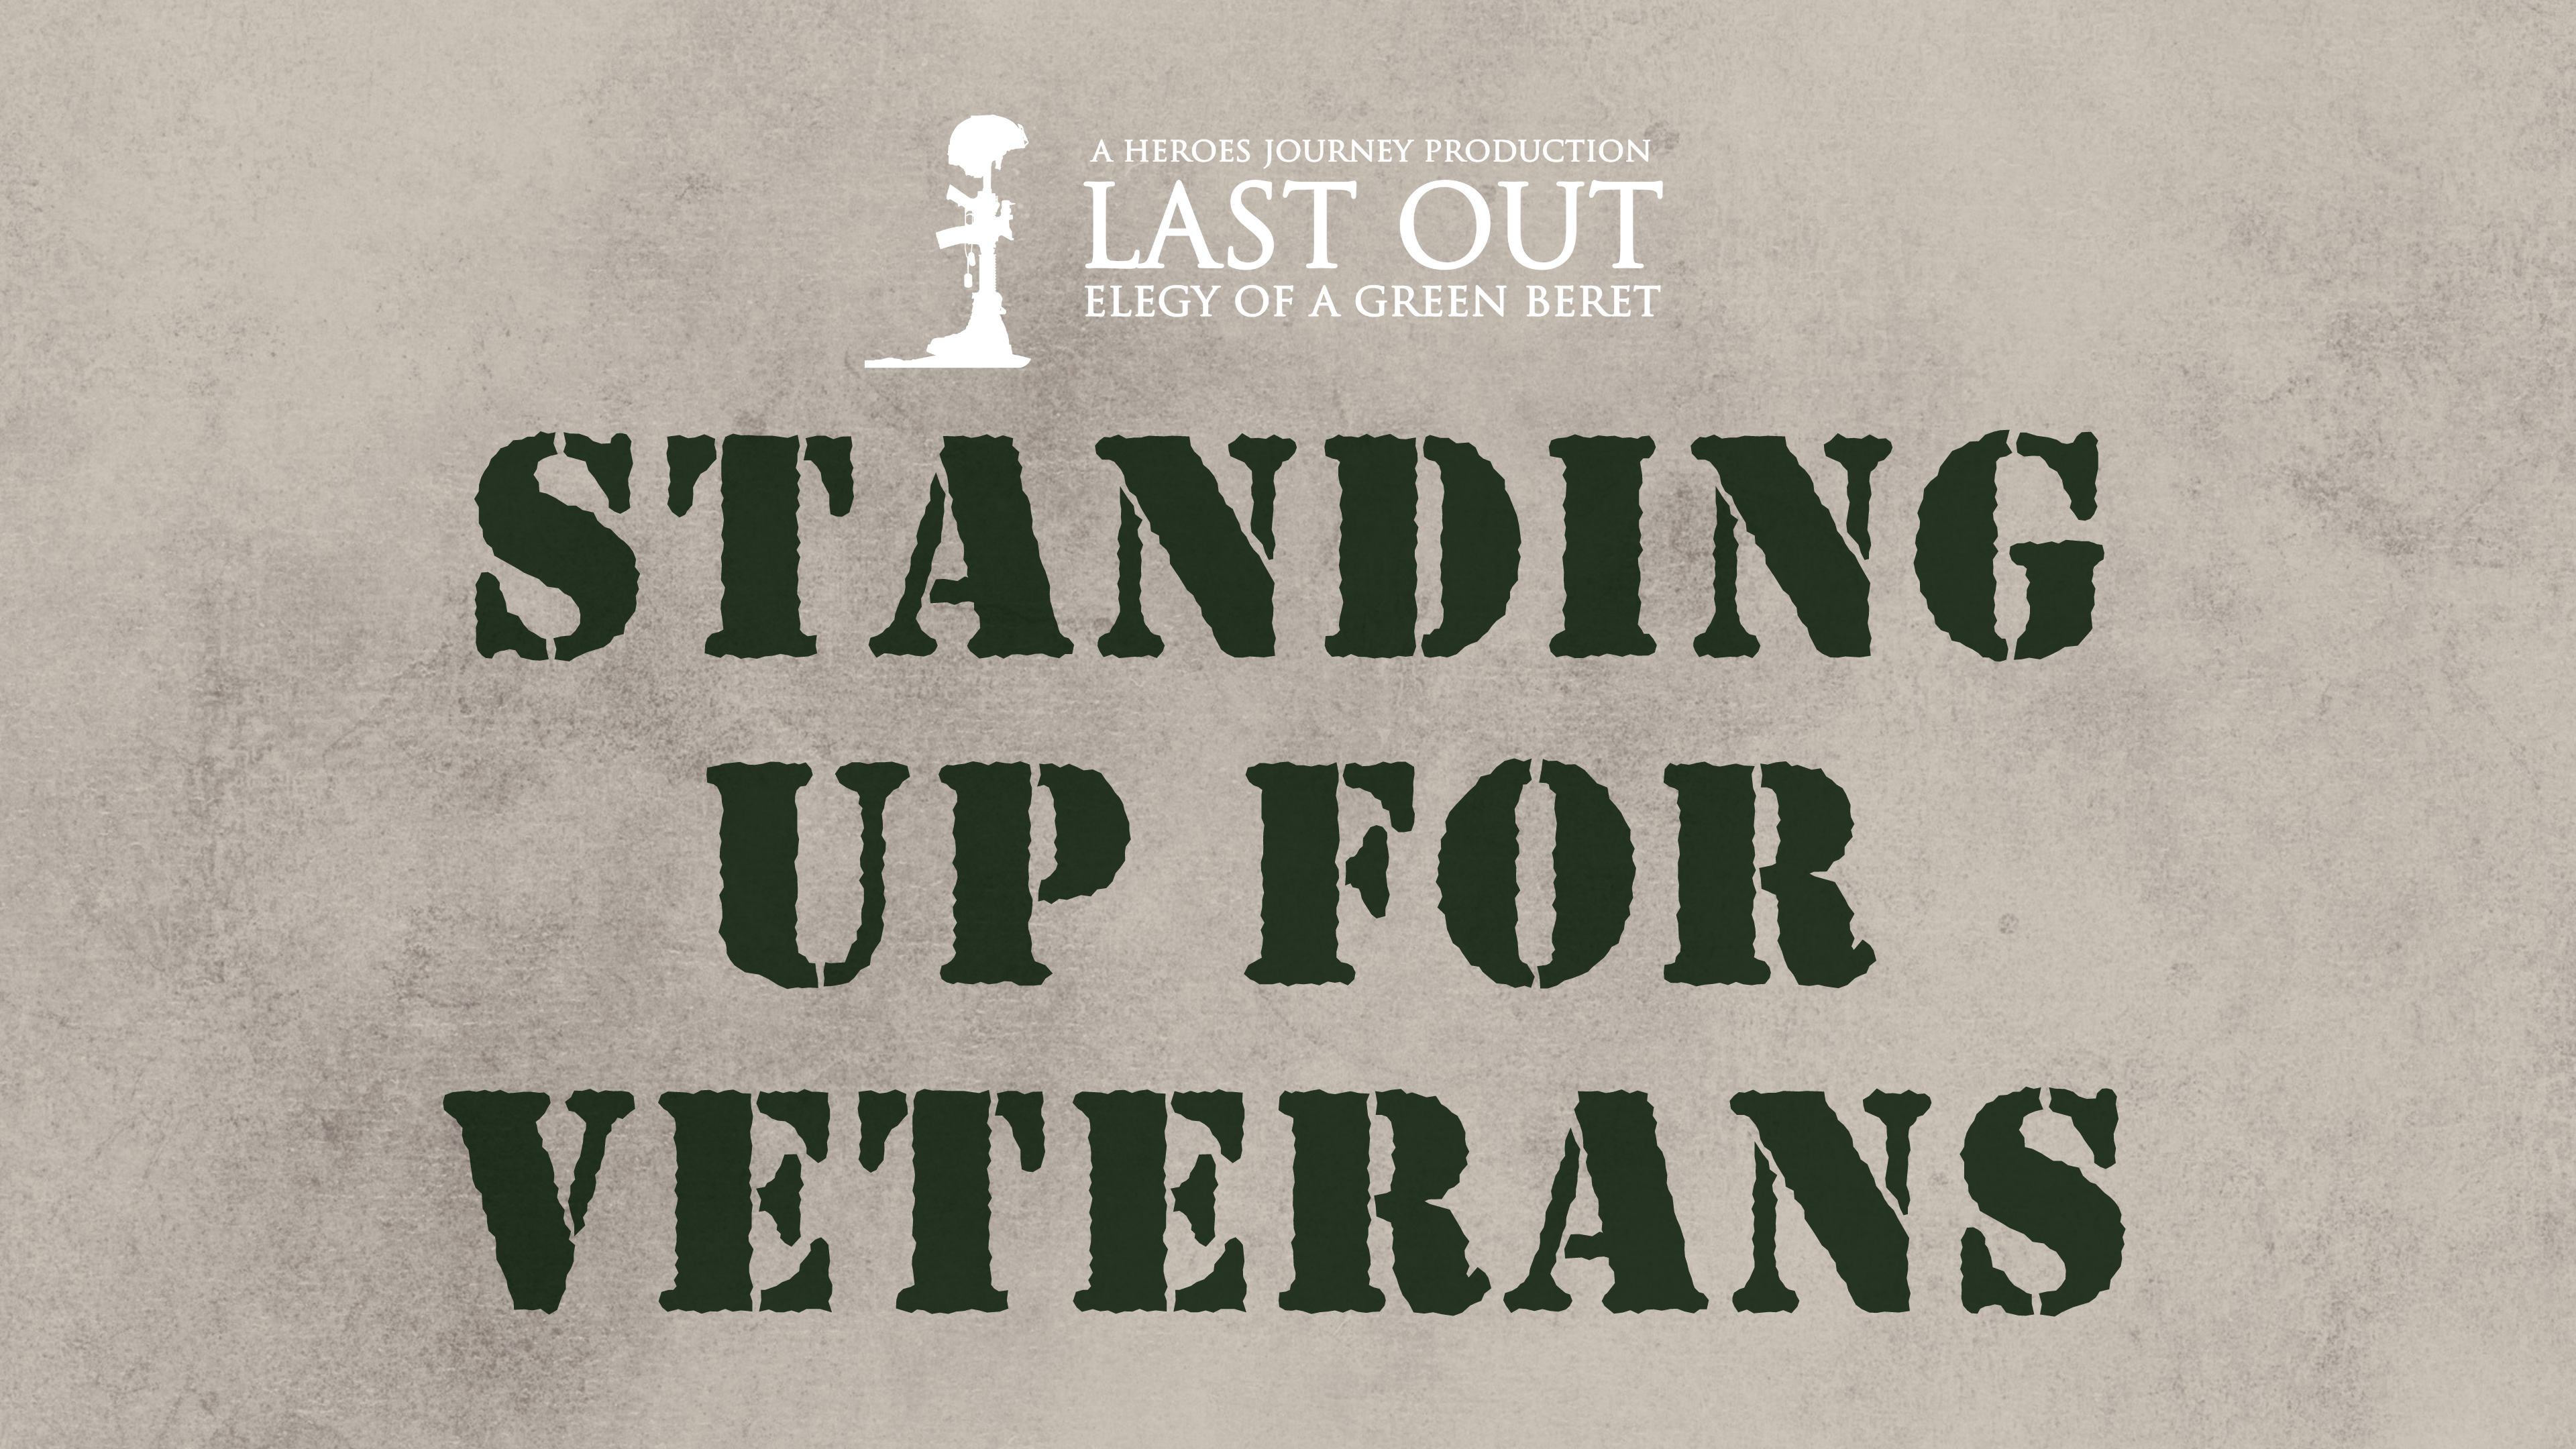 Standing Up for Veterans